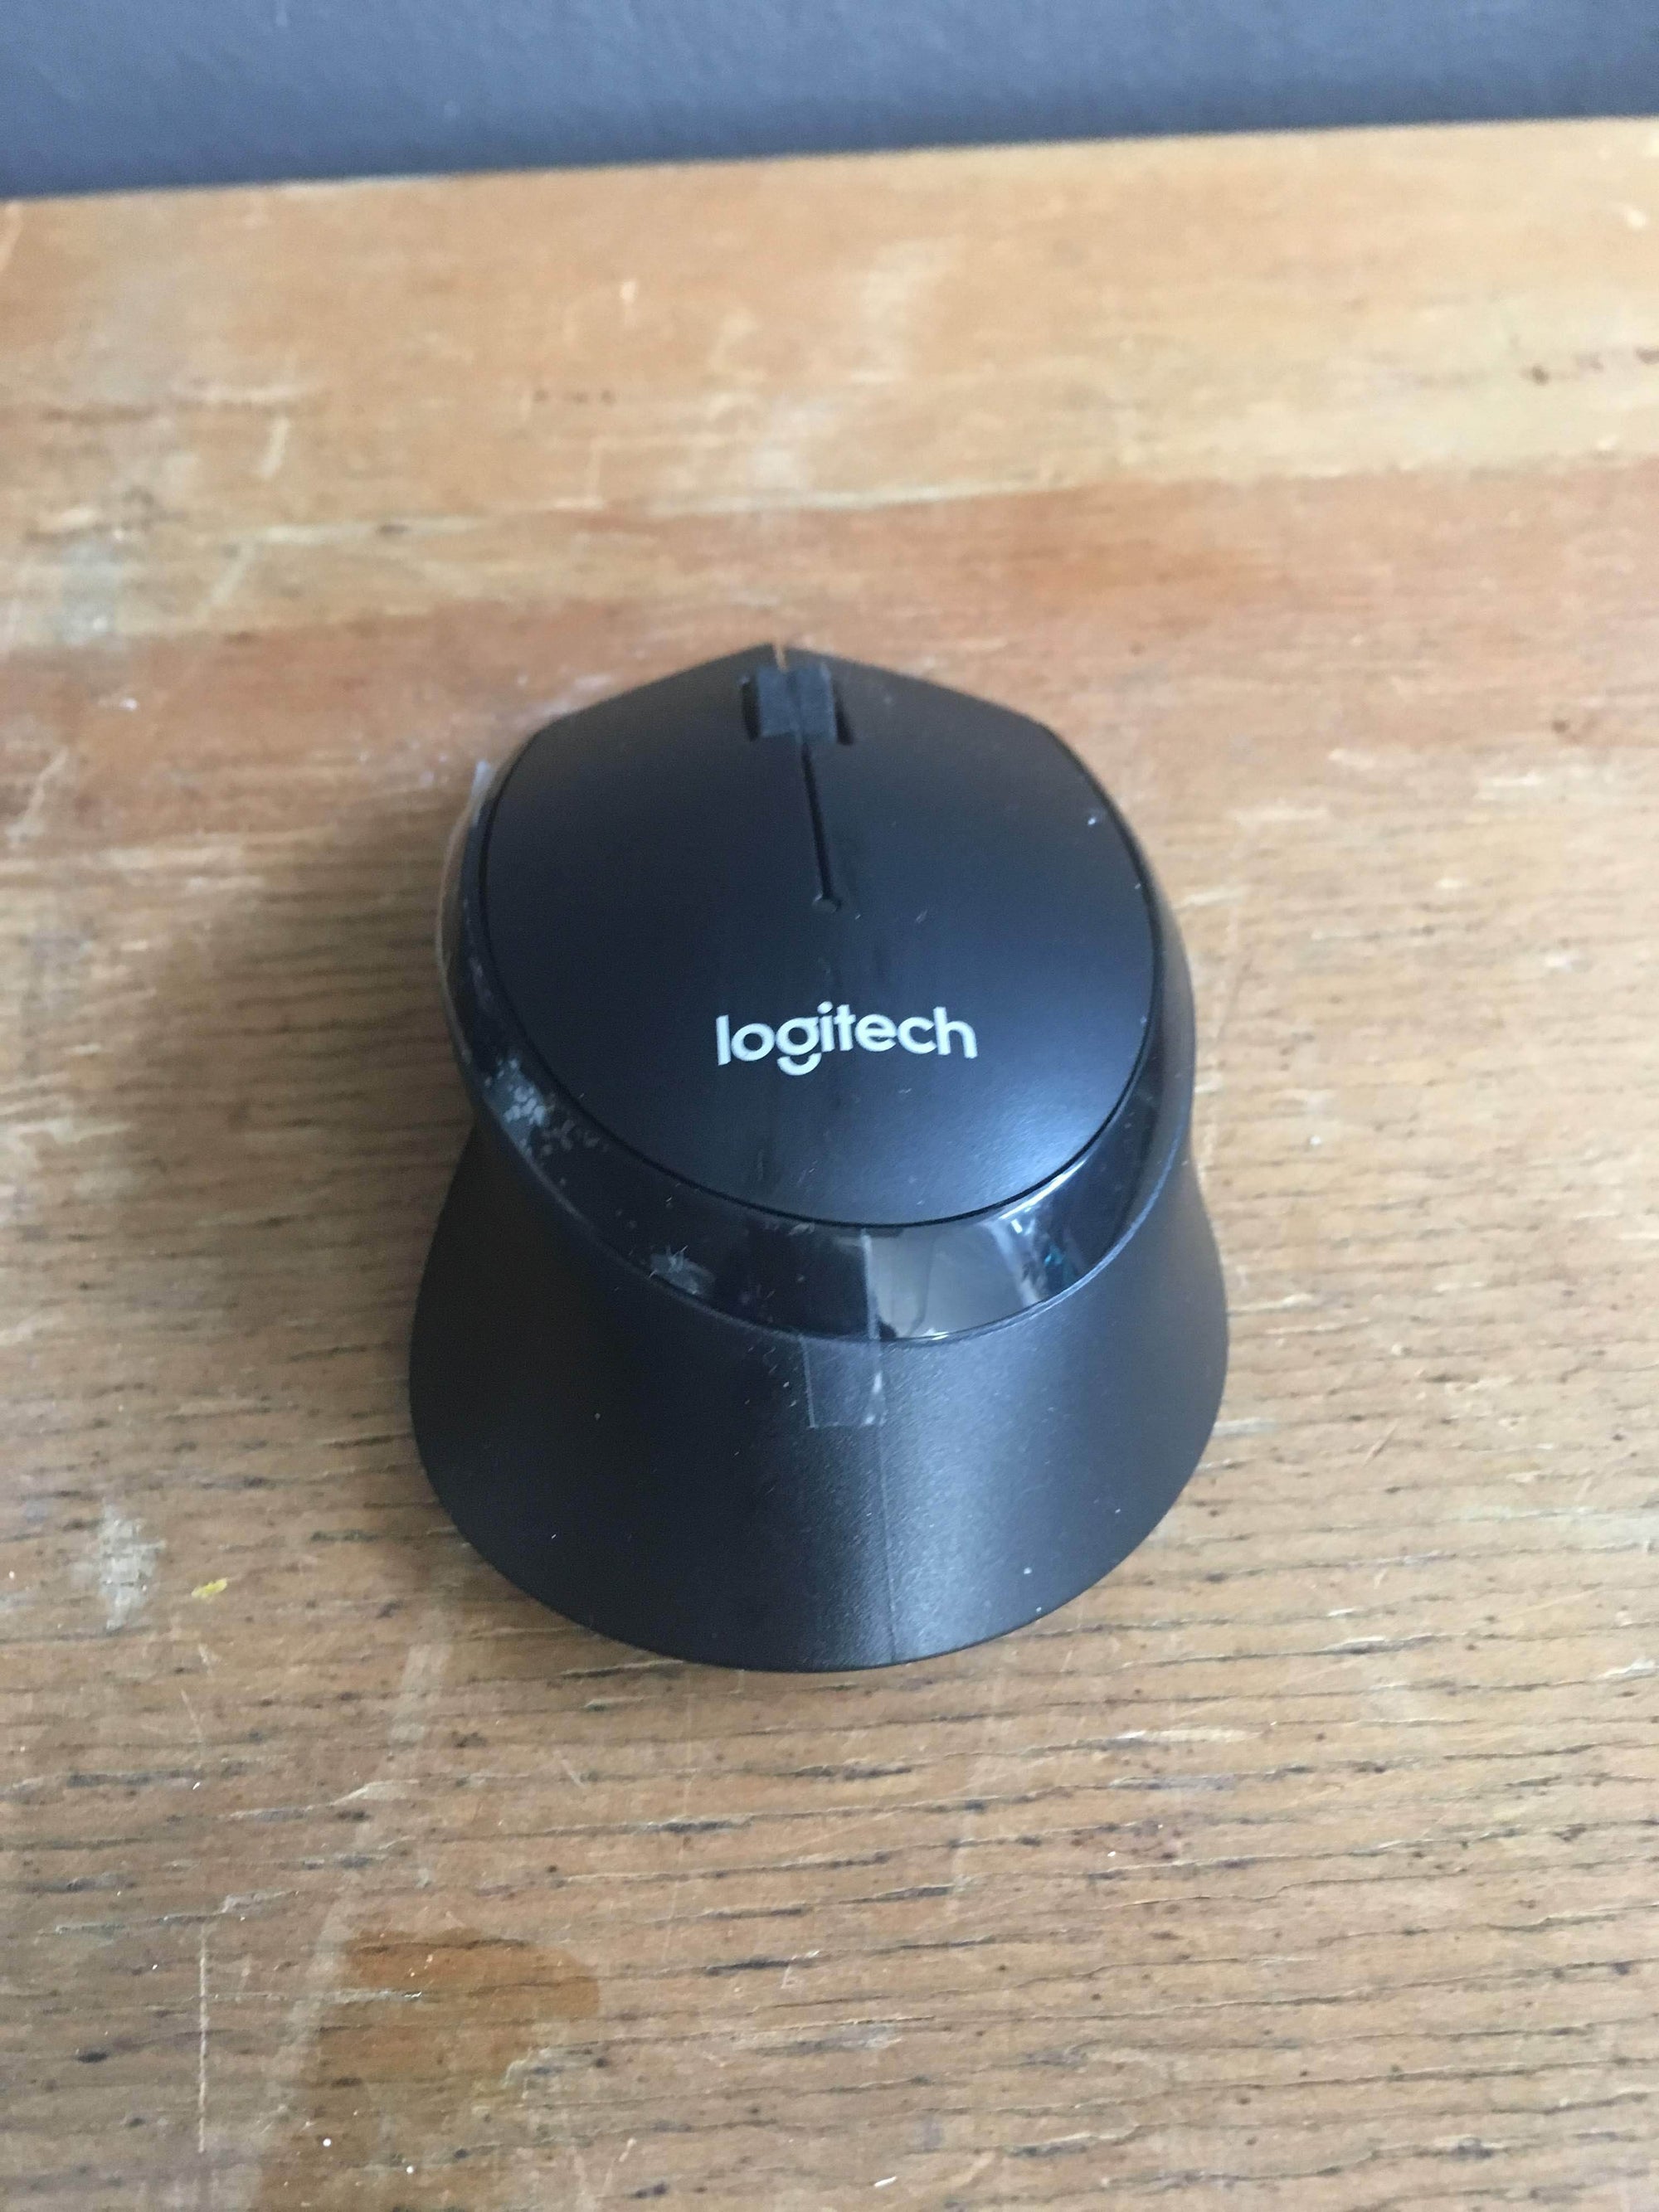 Wireless Logitech Mouse - 2ndhandwarehouse.com